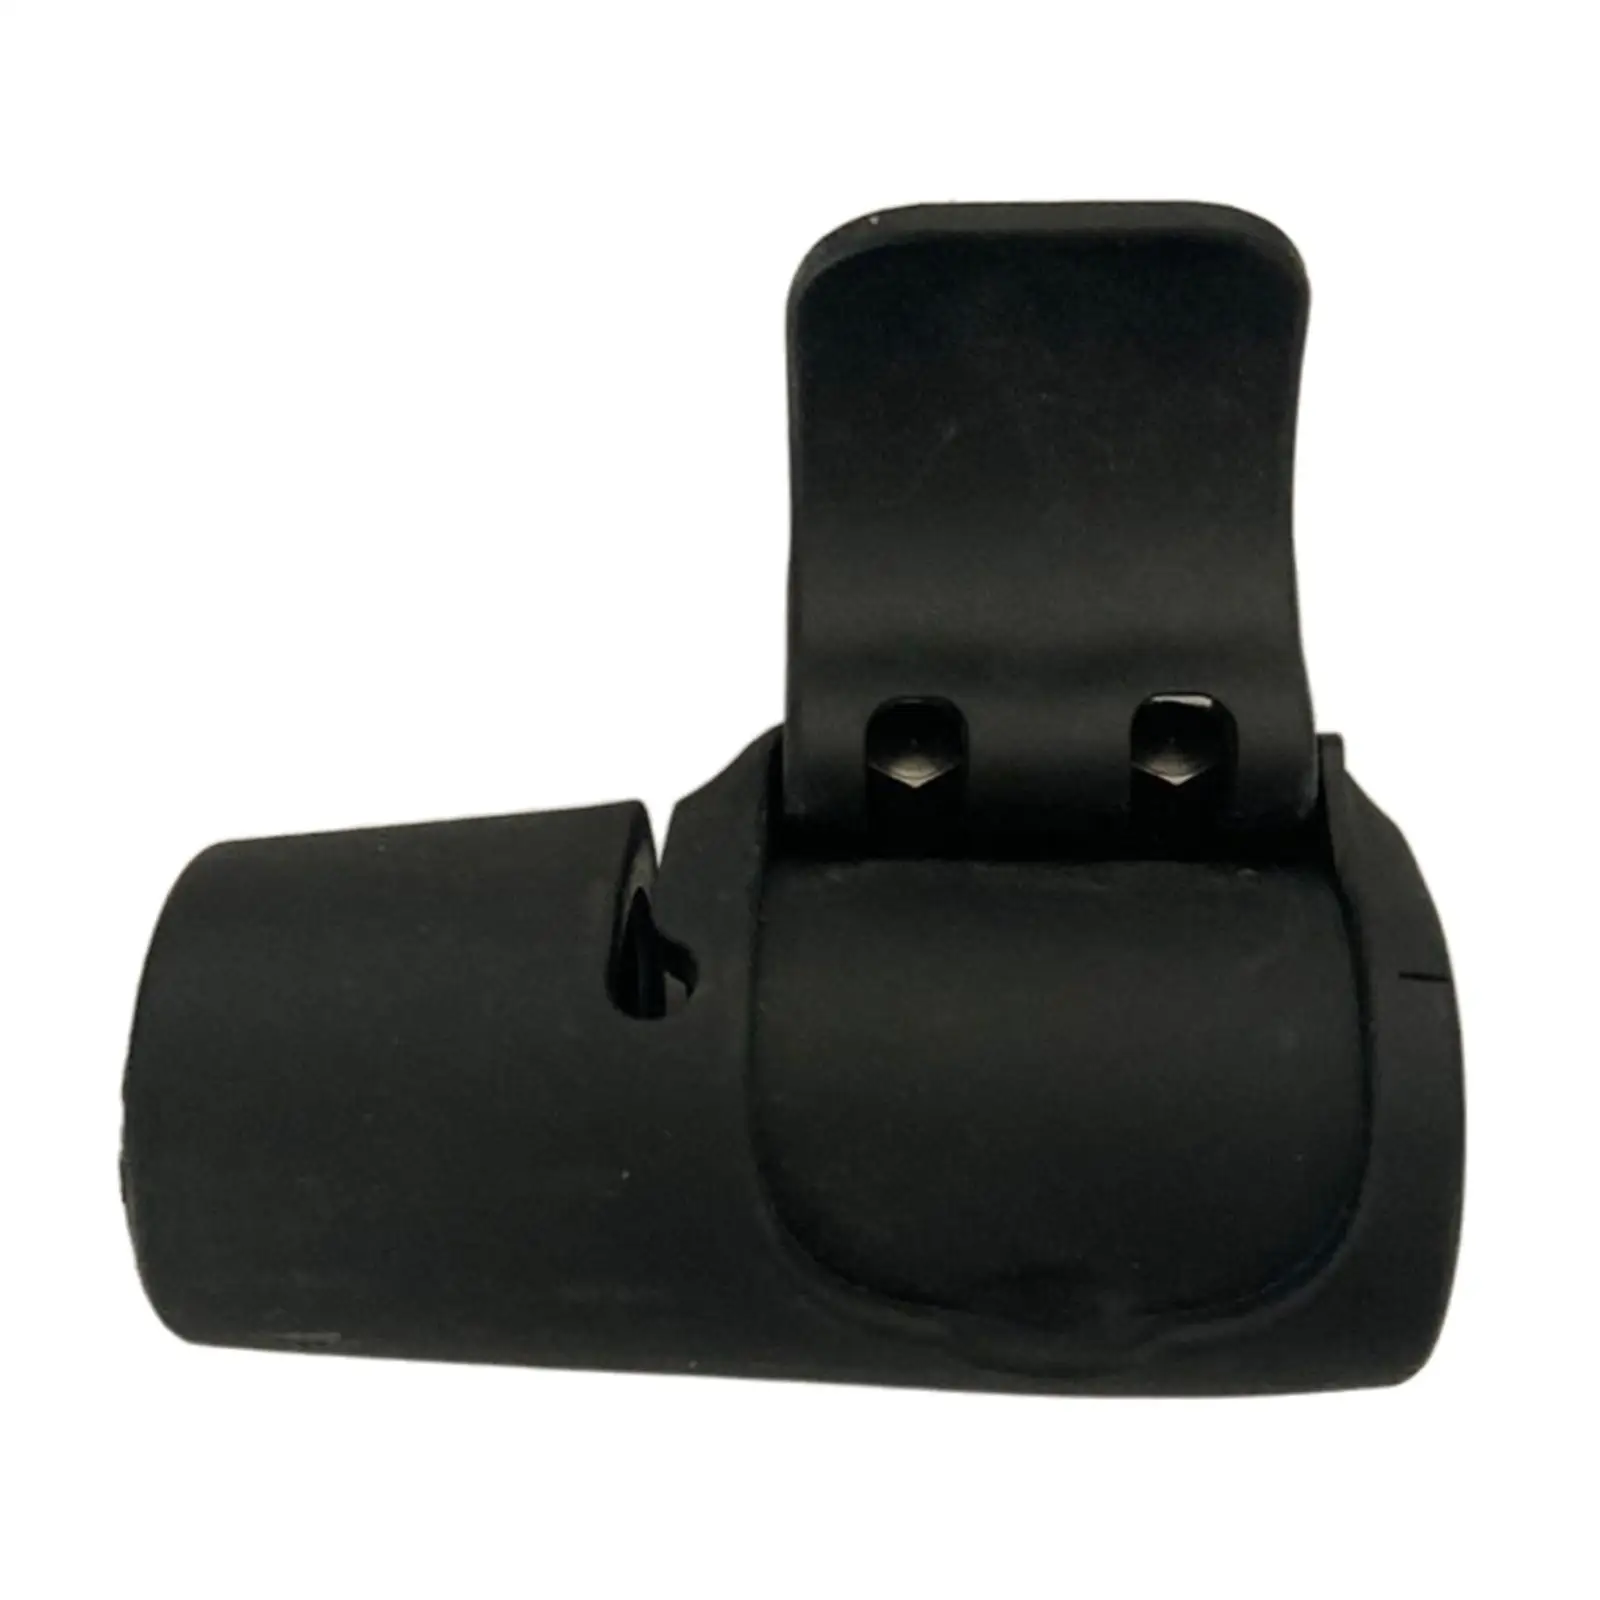 Nylon 26mm Paddle Shaft Clamp Adjuster Clip Surf Paddle Lock Practical Accessories Adjustable Button Part for Adjusting Length